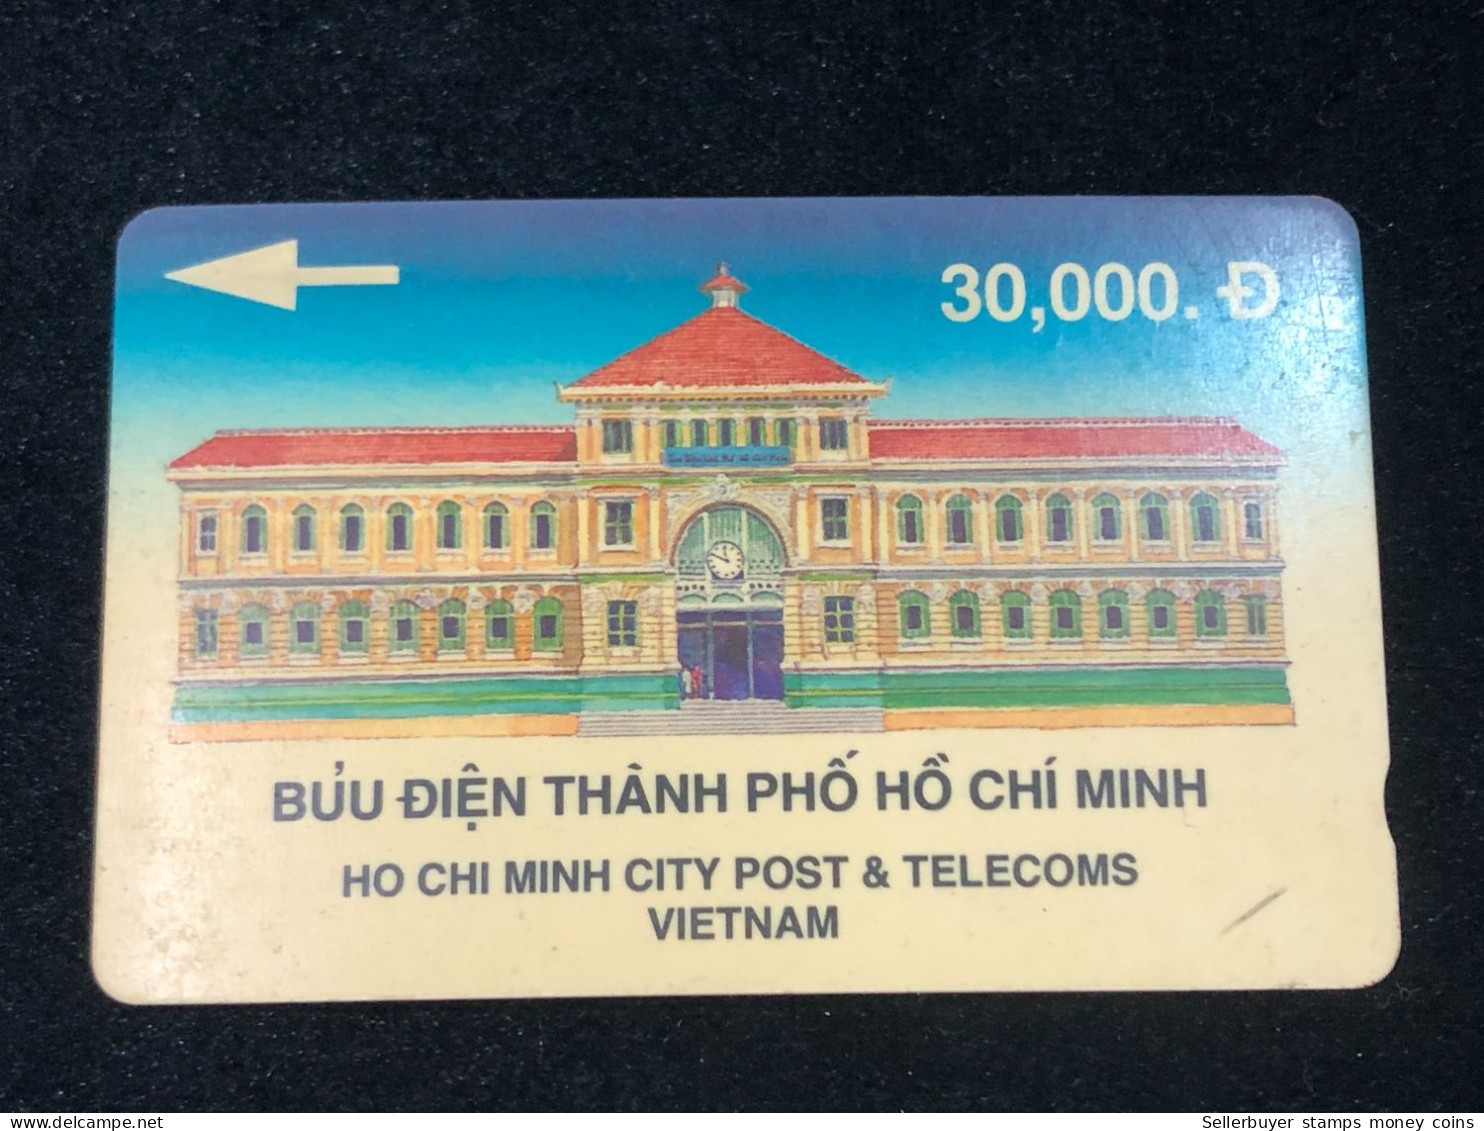 Card Phonekad Vietnam(hcm Building 30 000dong-1991)-1pcs - Vietnam